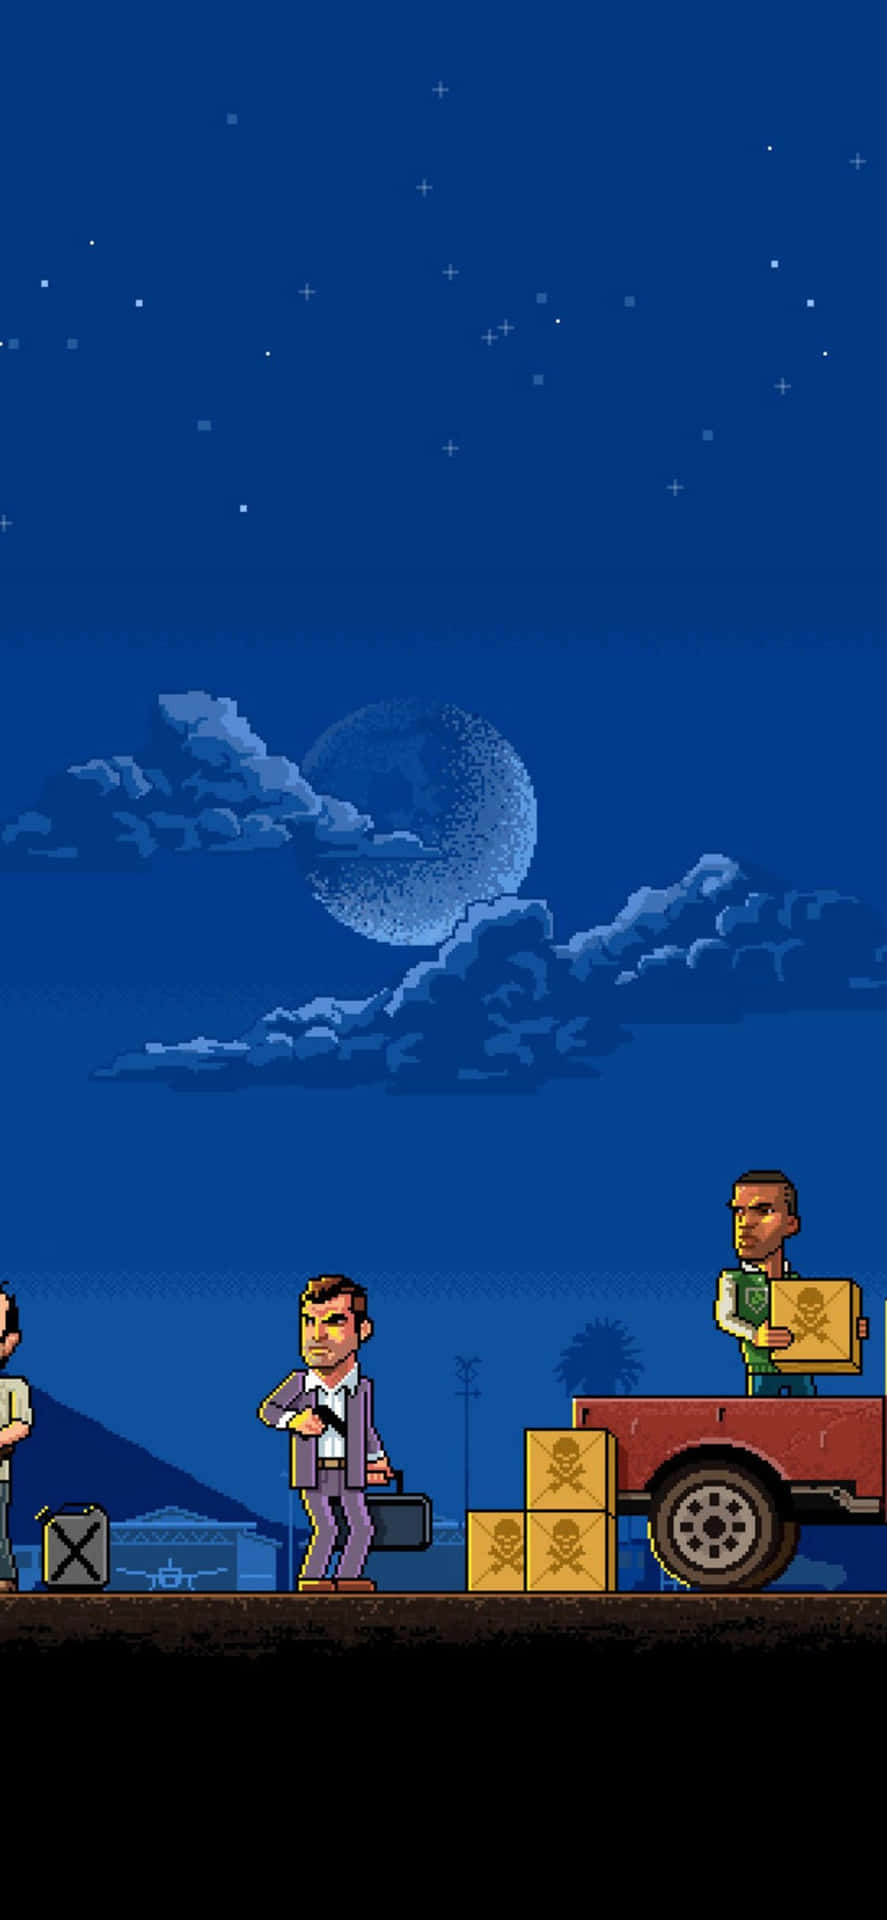 Sfondoper Iphone X Di Grand Theft Auto V In Stile Pixel Art.